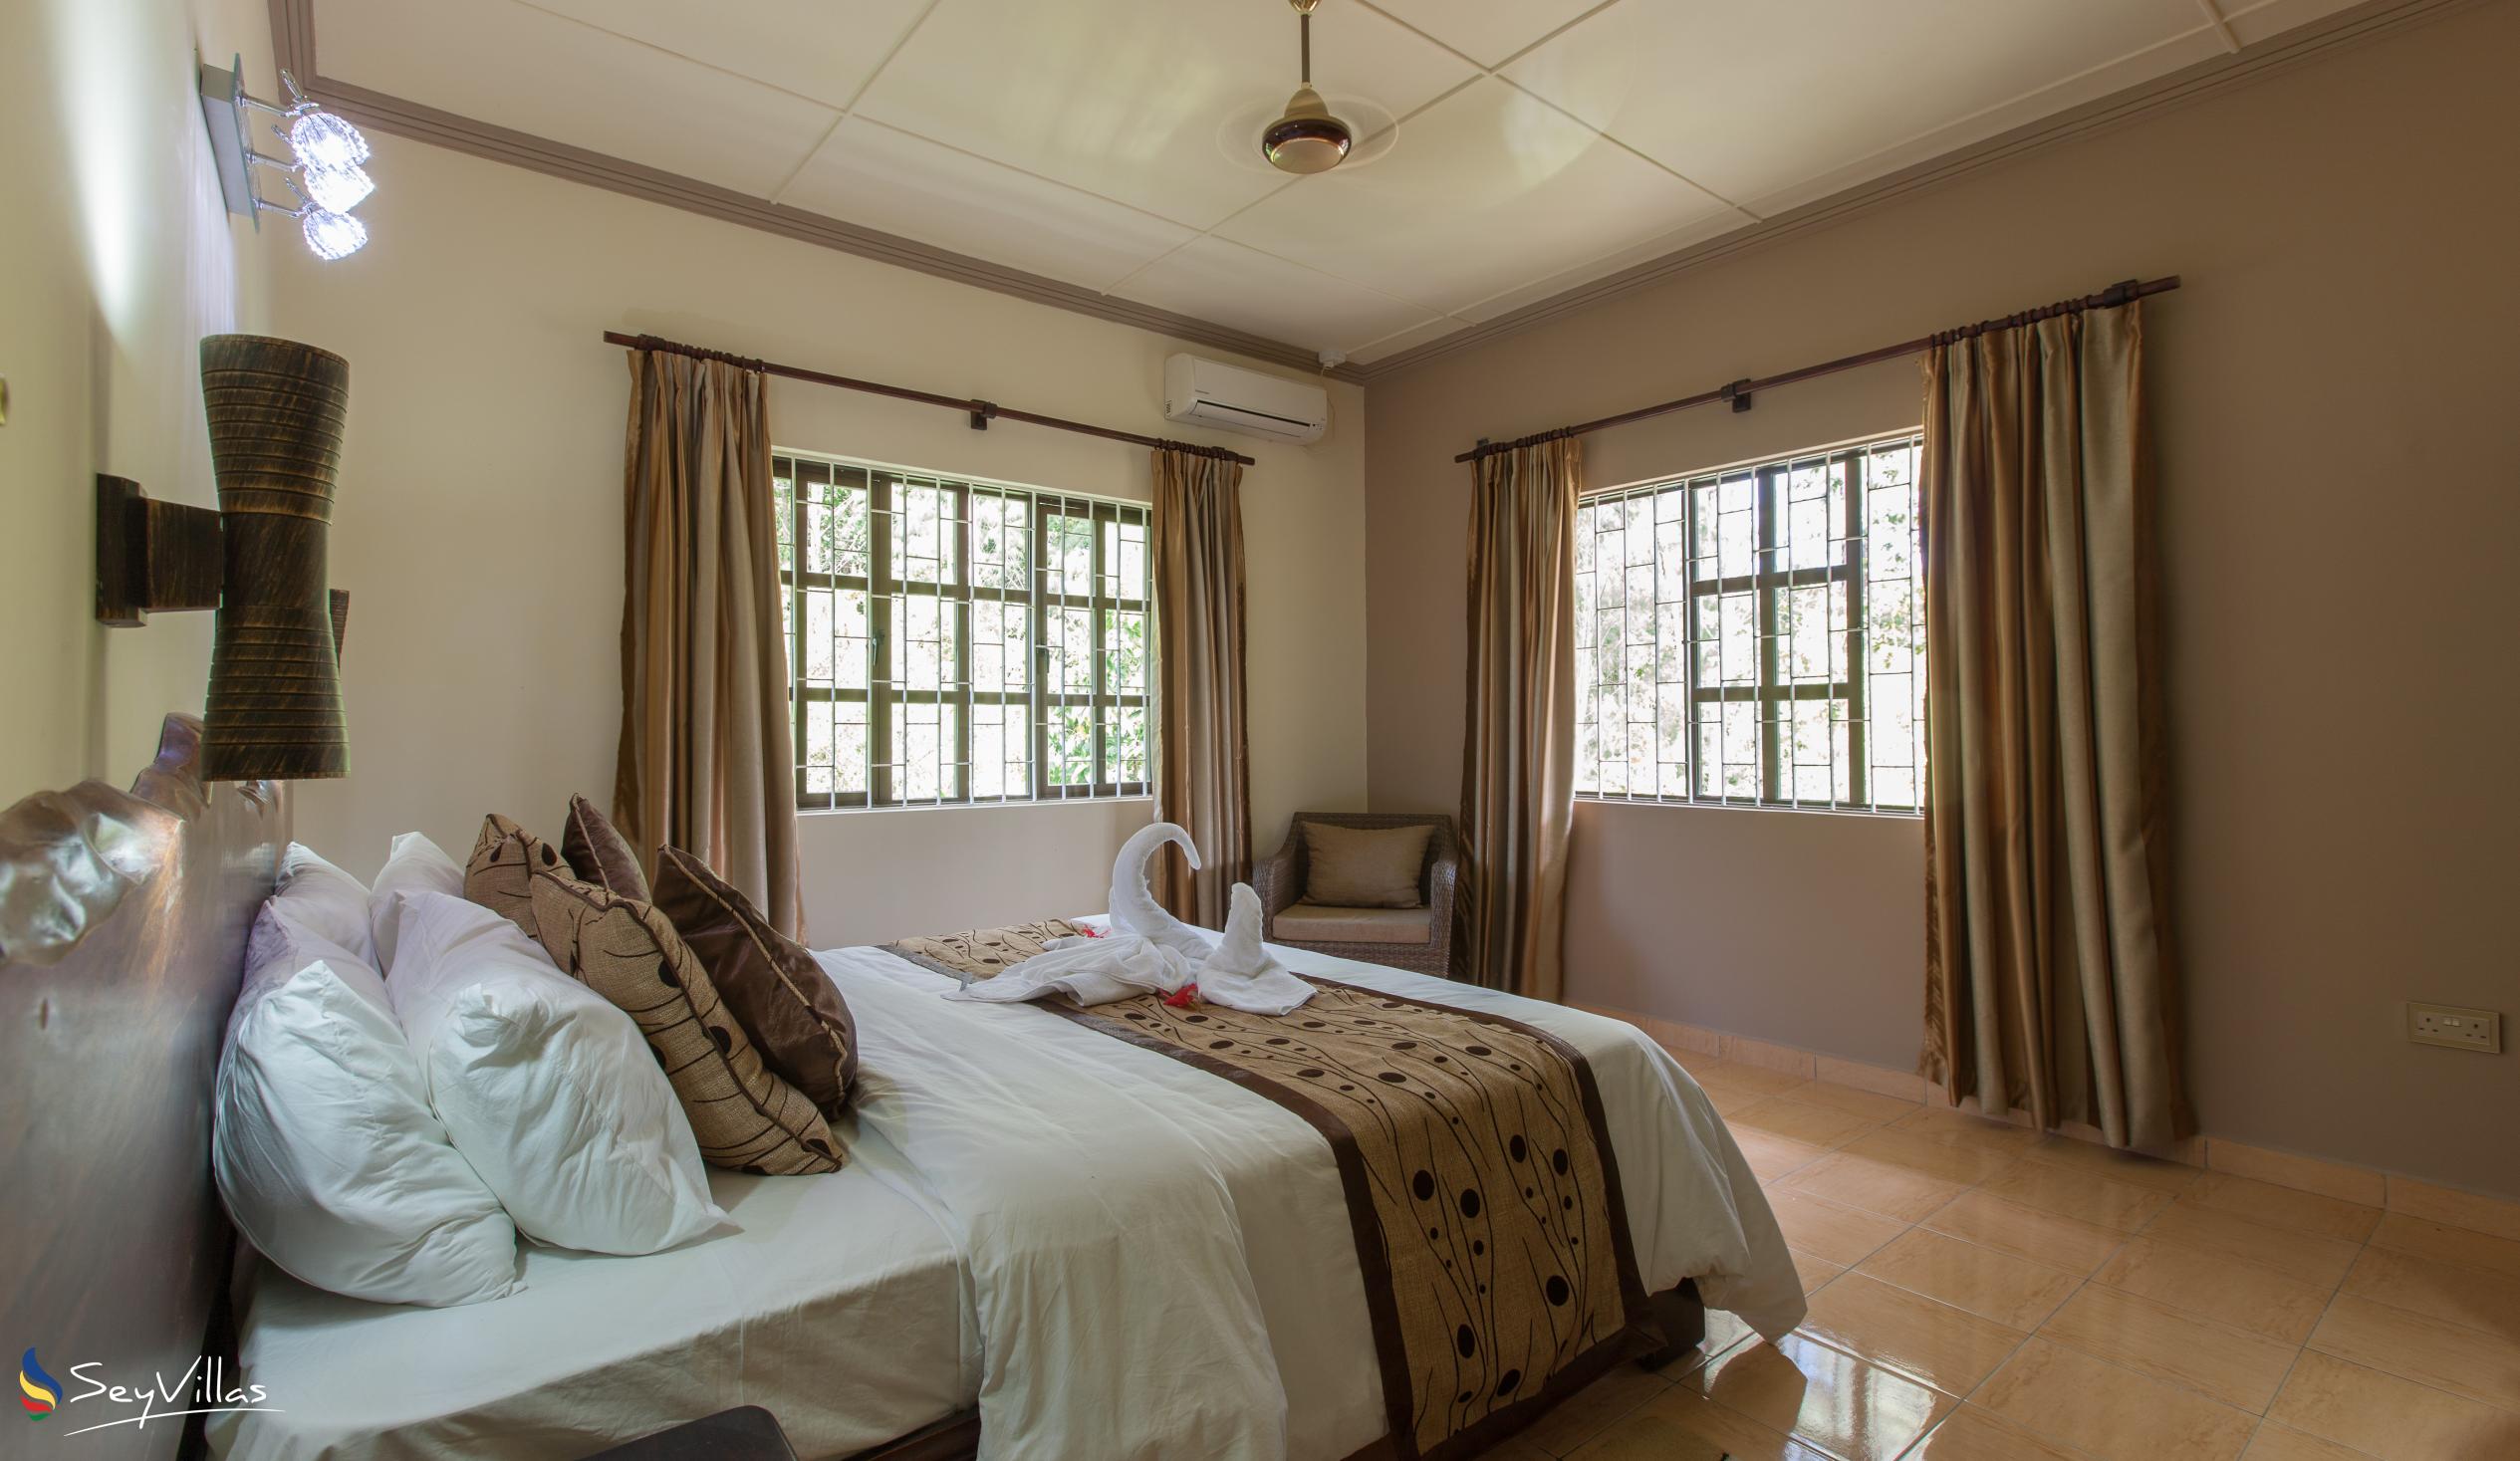 Photo 77: Chez Bea Villa - Superior Room - Praslin (Seychelles)